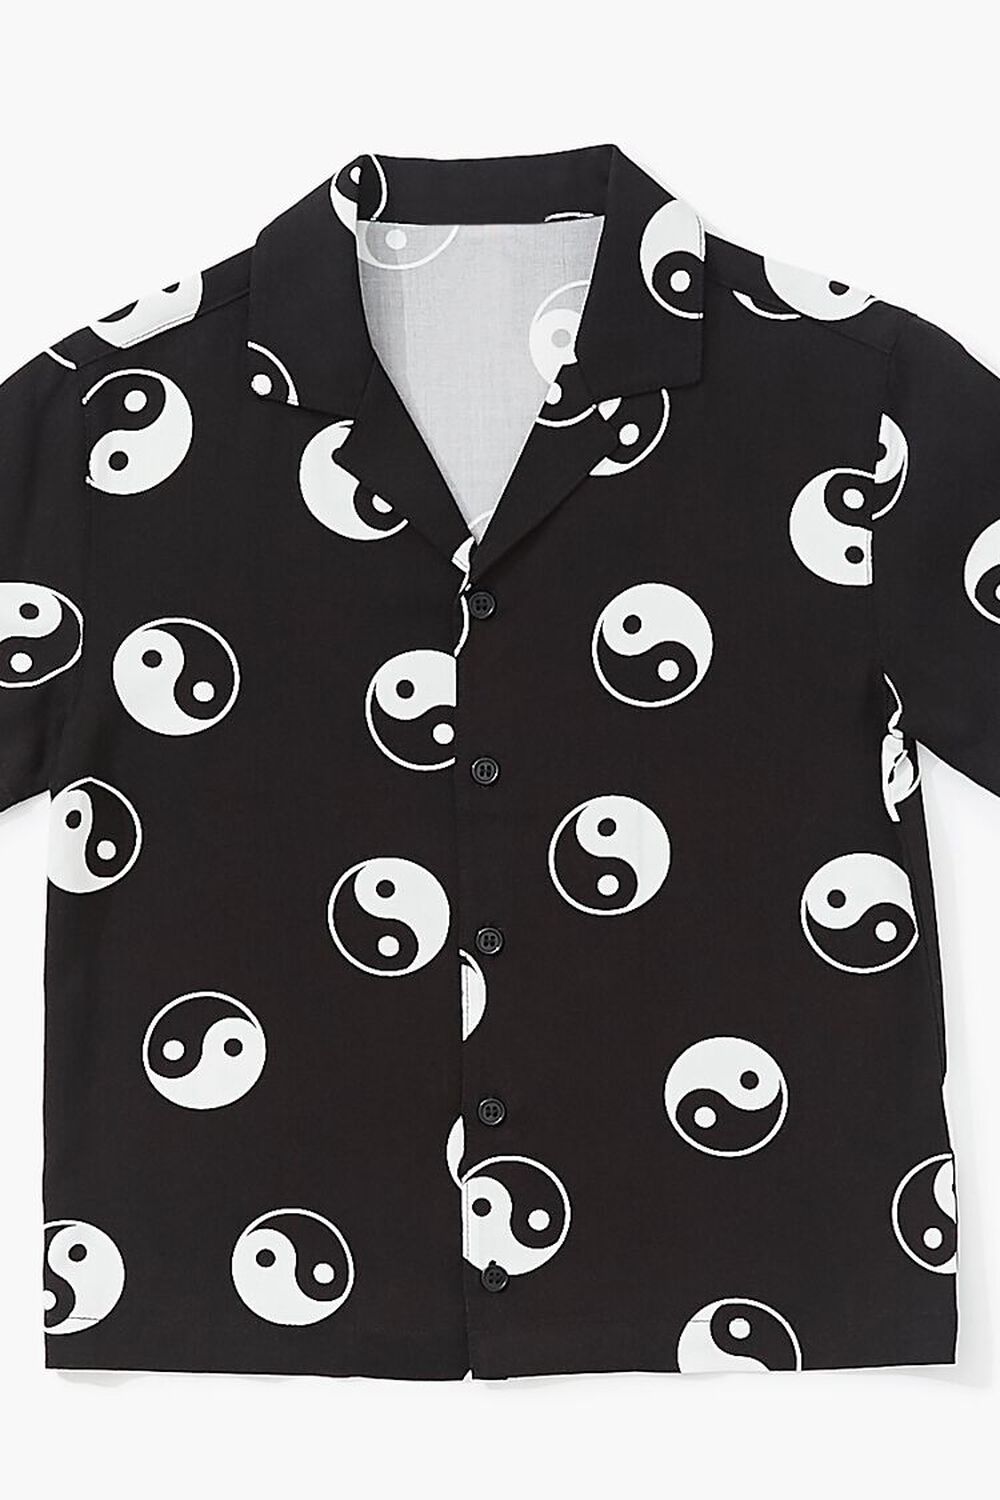 BLACK/WHITE Kids Yin Yang Print Shirt (Girls + Boys), image 3